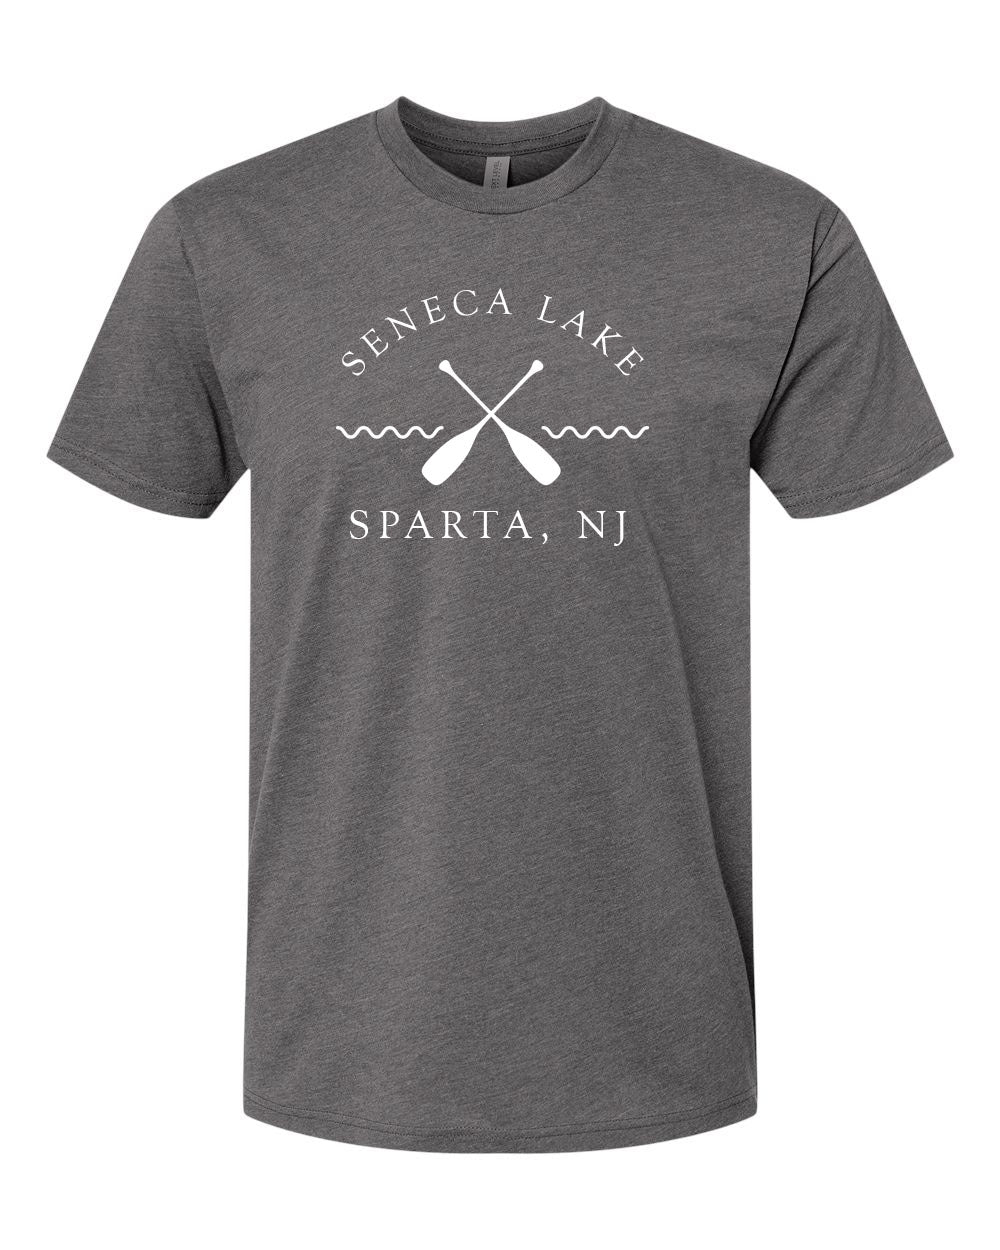 Seneca Lake Design 5 T-Shirt